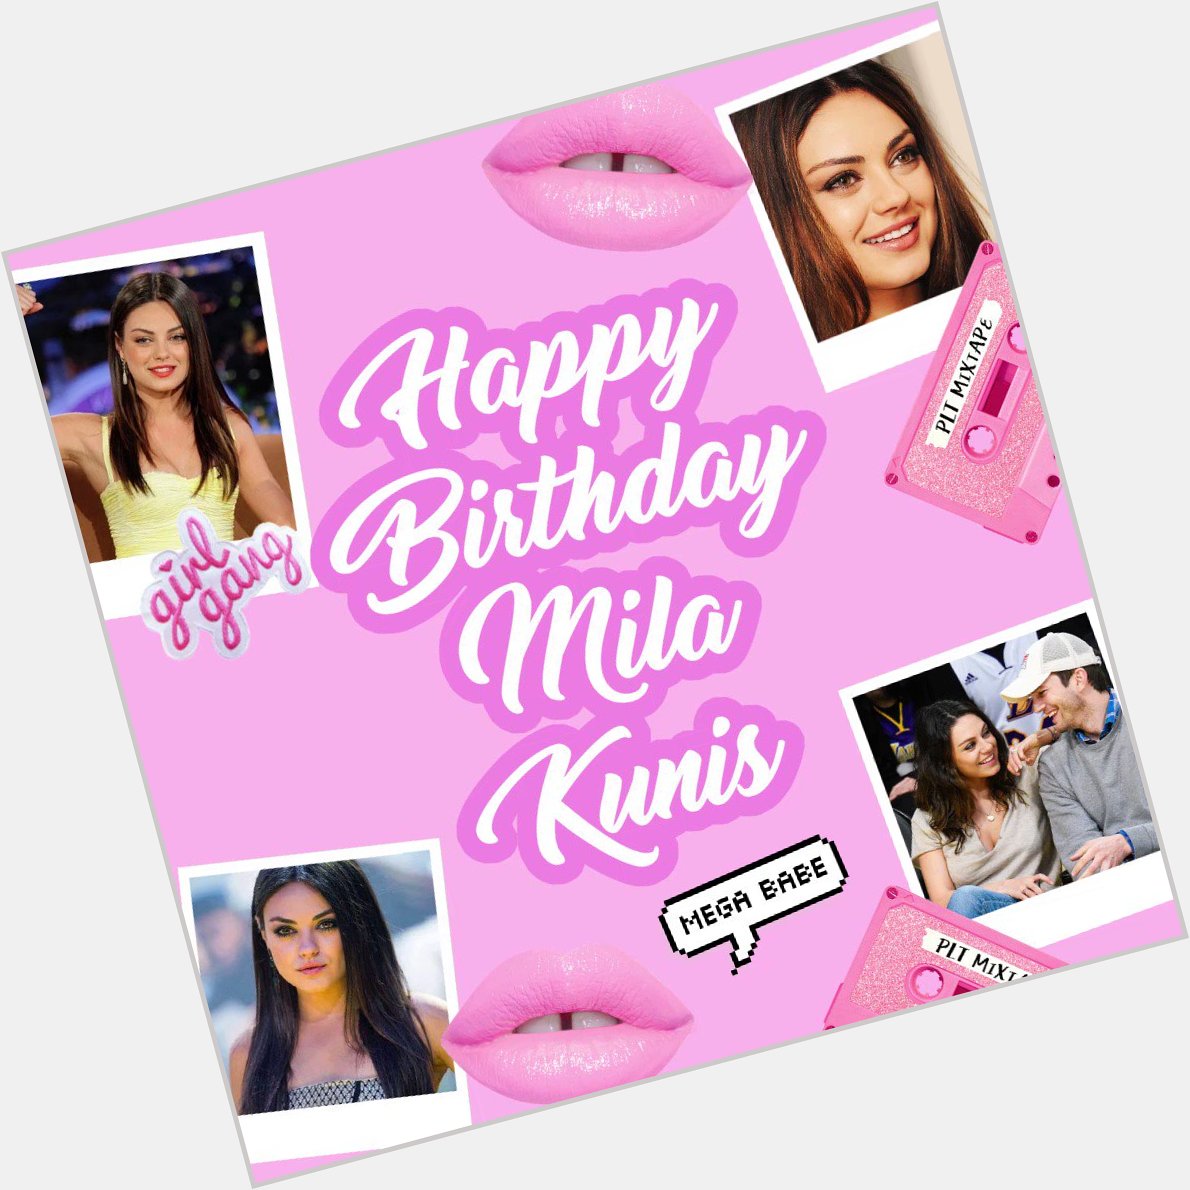 Happy birthday to our on-screen girl crush Mila Kunis   